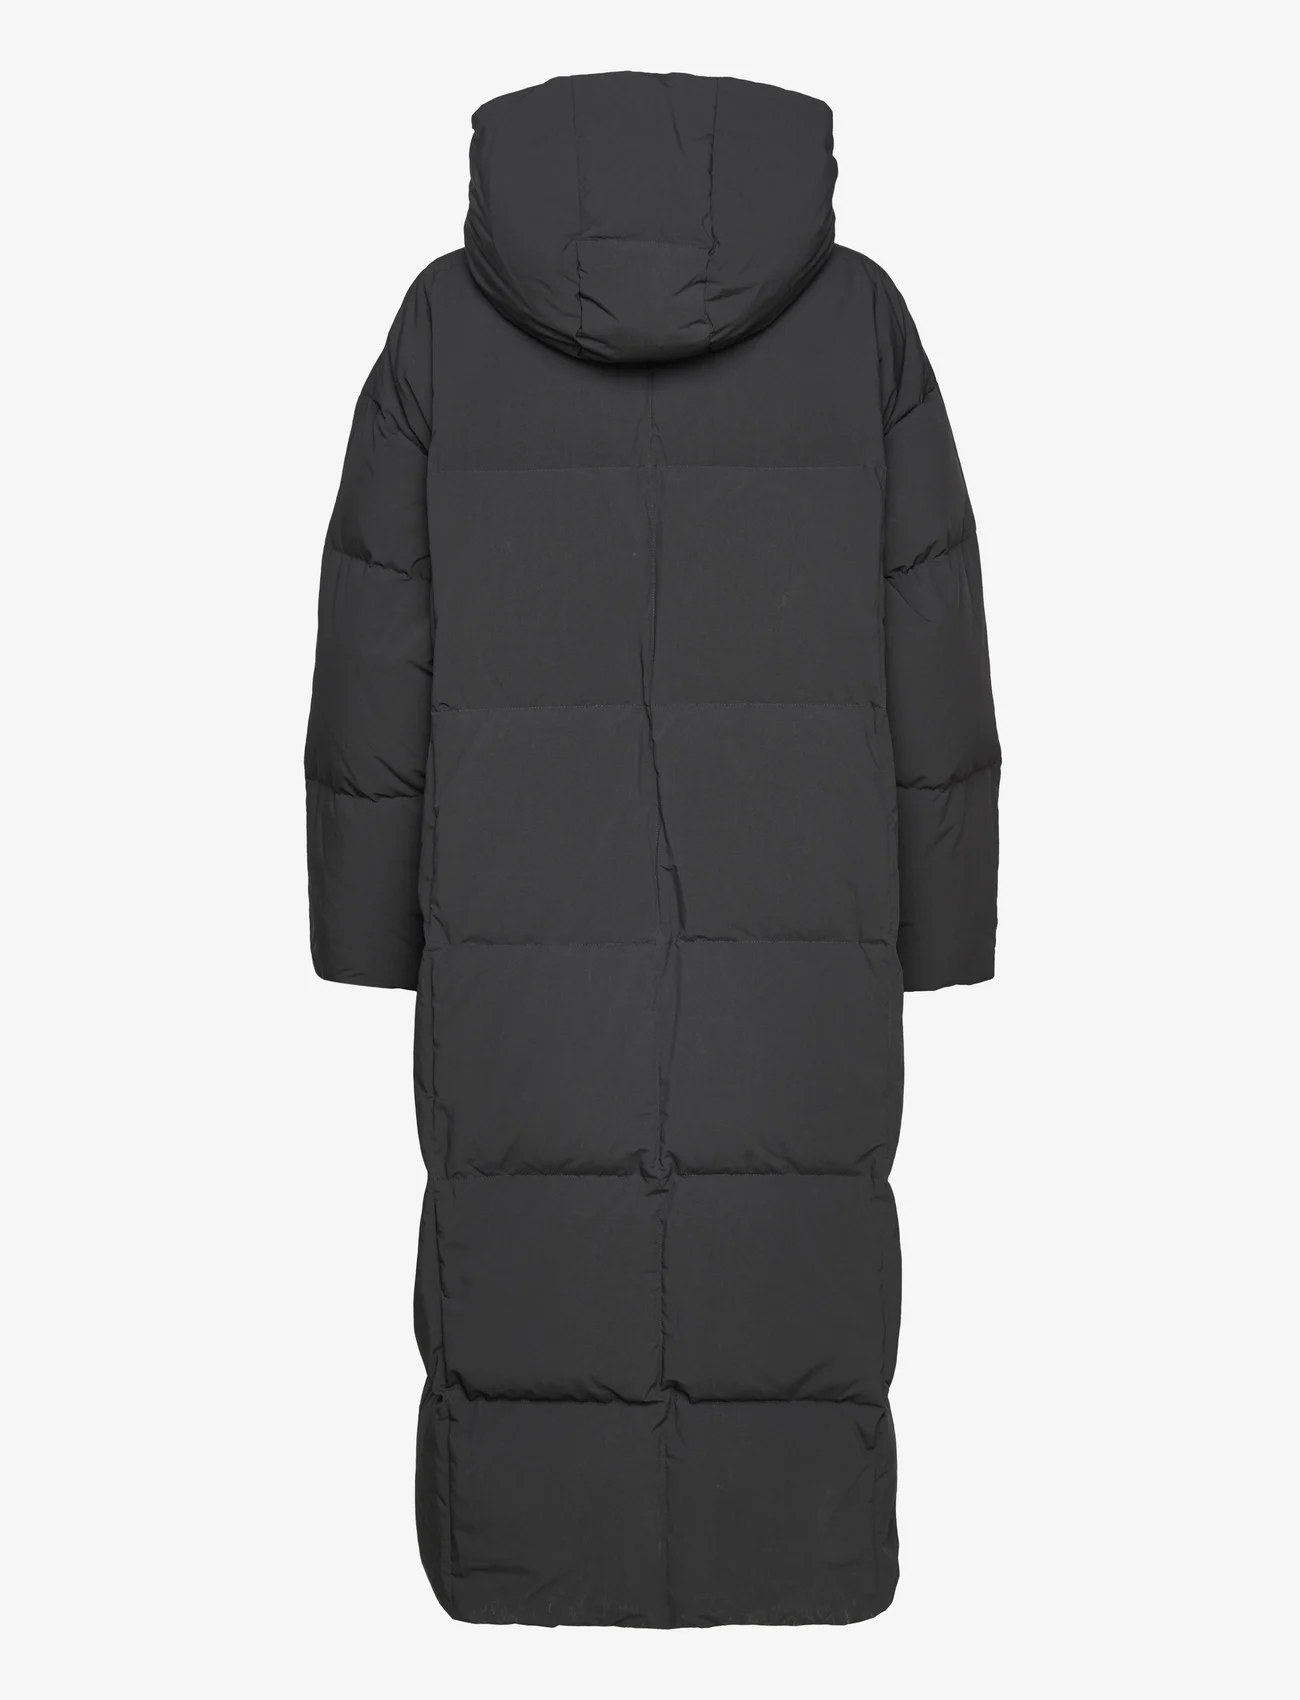 Stand Studio - Nylah Coat - winter coats - black - 1